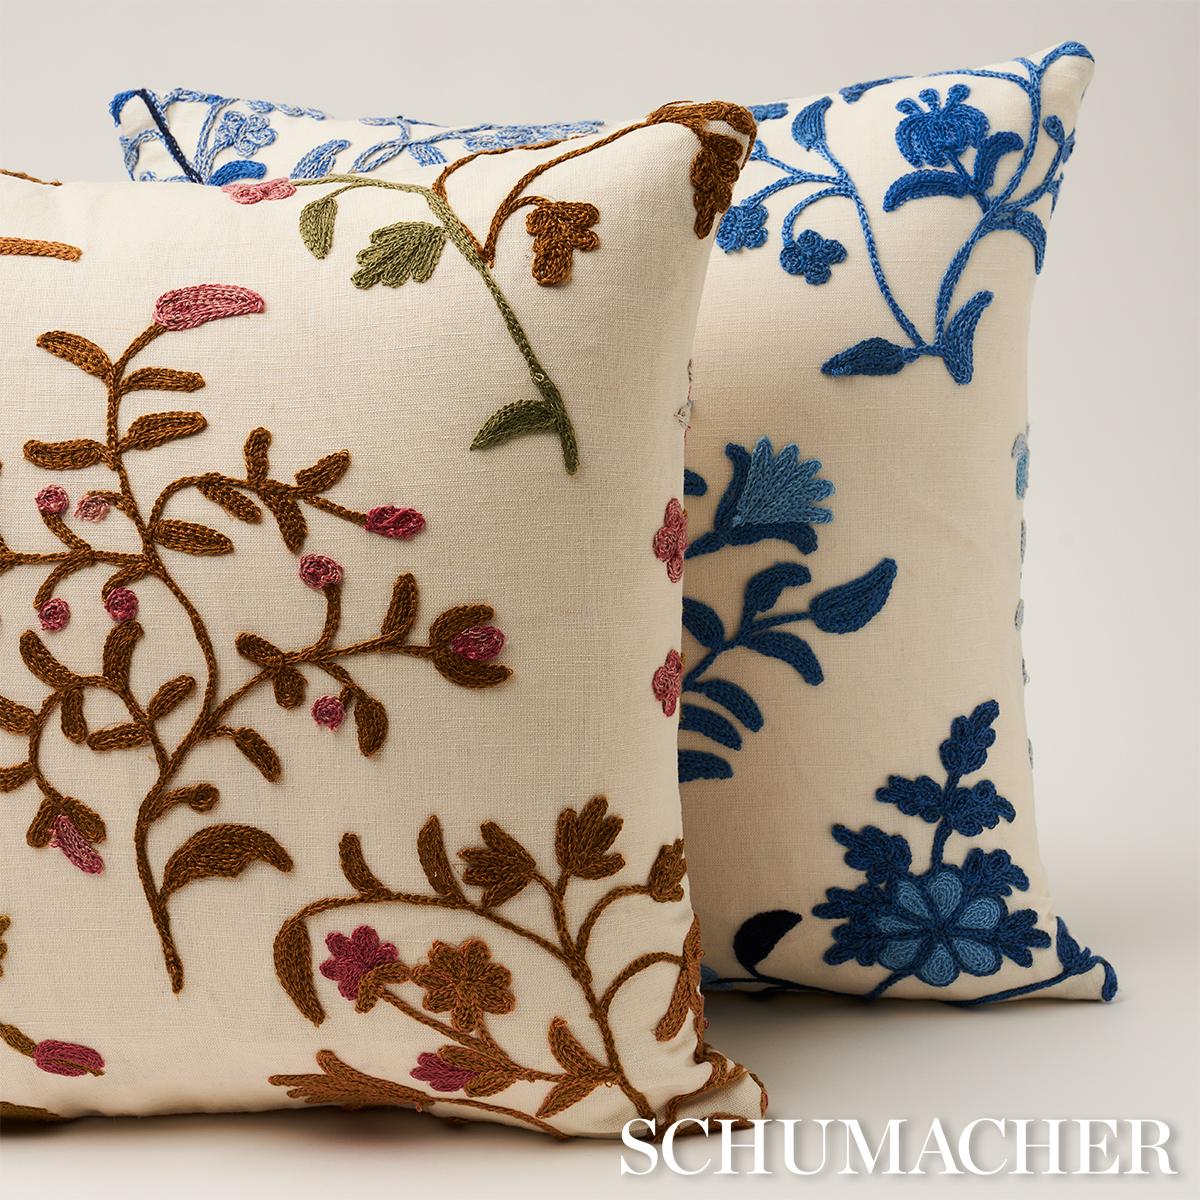 Raleigh Crewel Embroidery Pillow B_AUTUMN